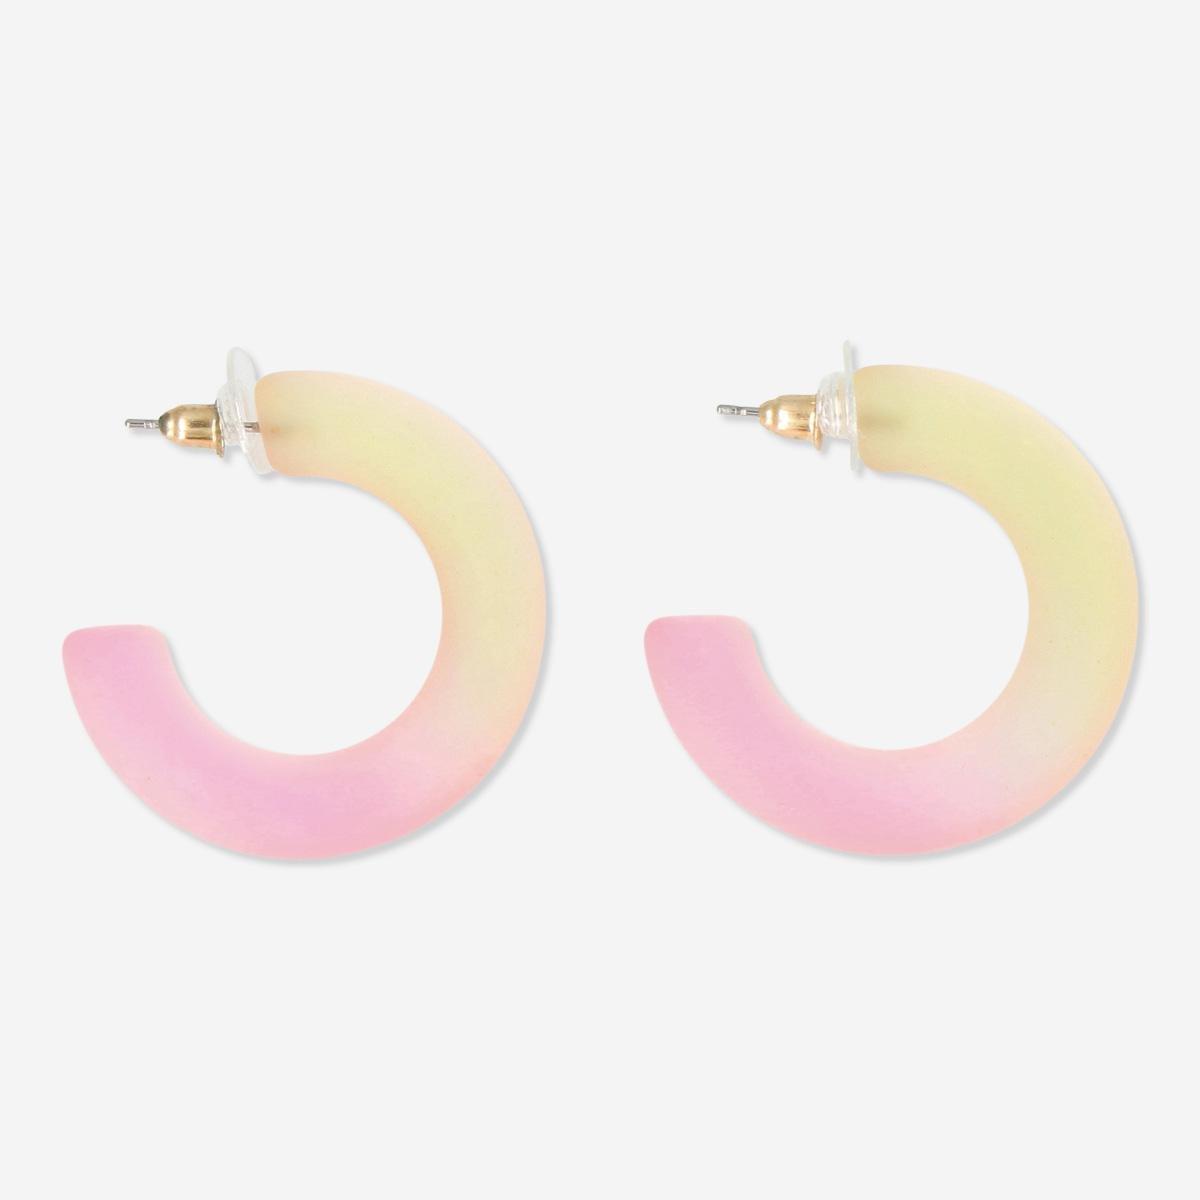 Multicolour earrings